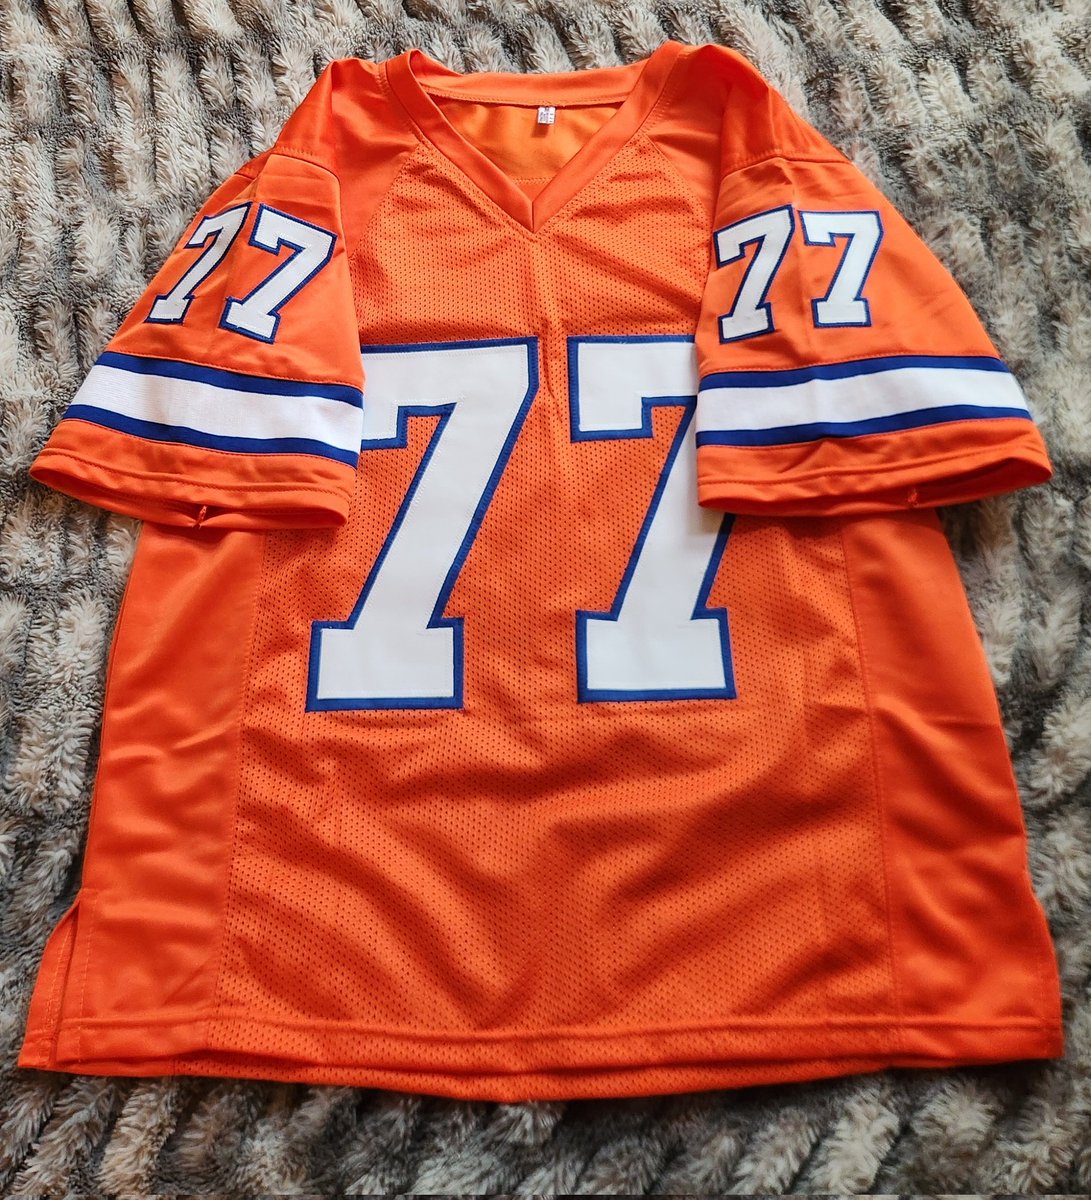 Got my orange crush jersey ready for the season 🔥